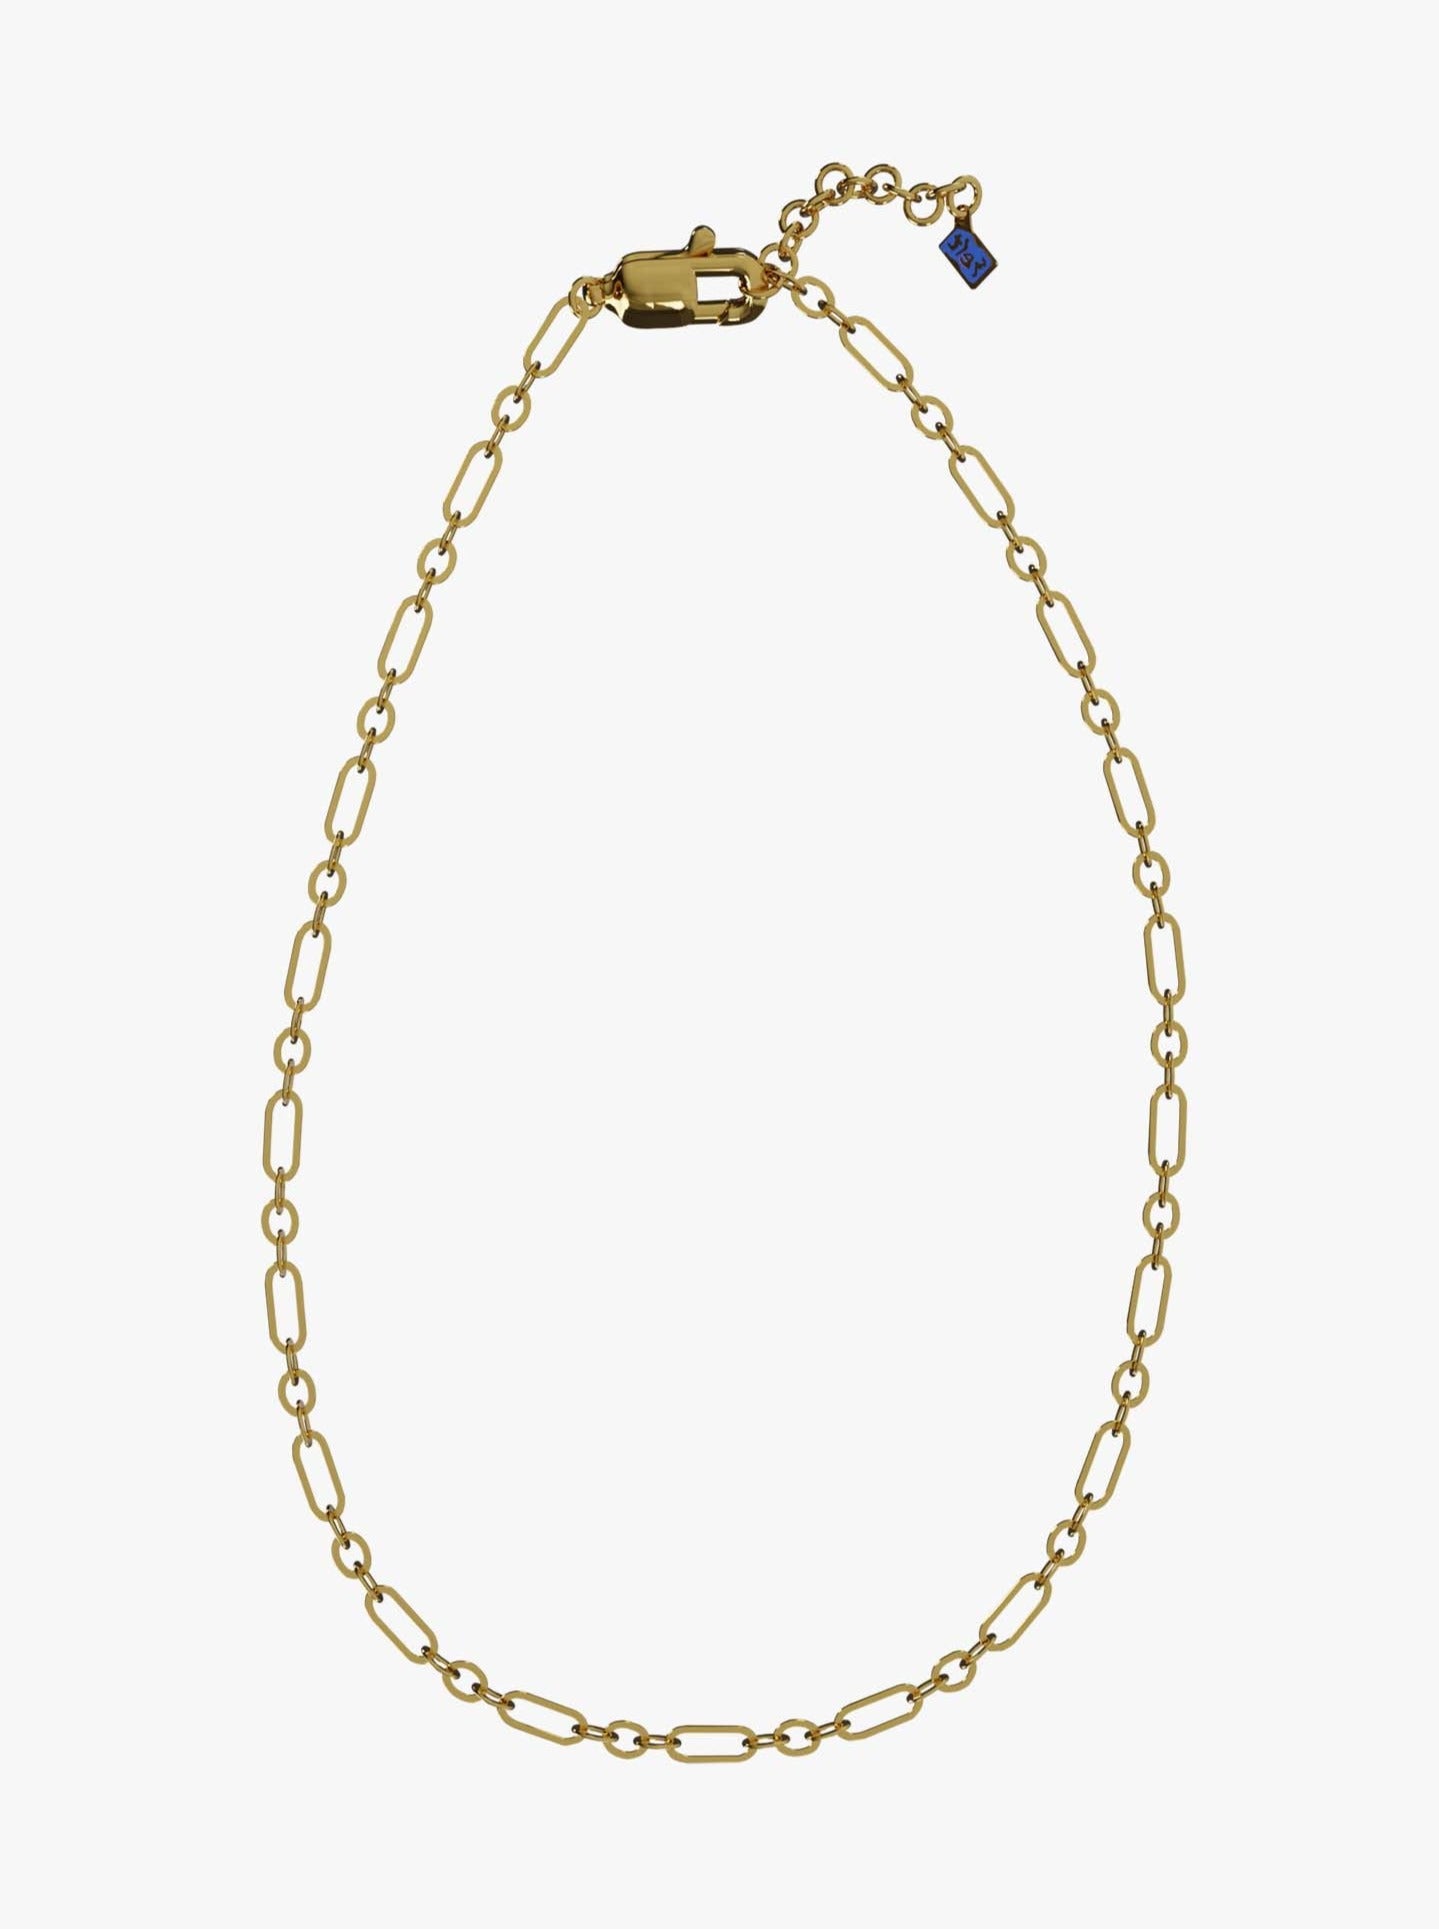 Lane gold chain